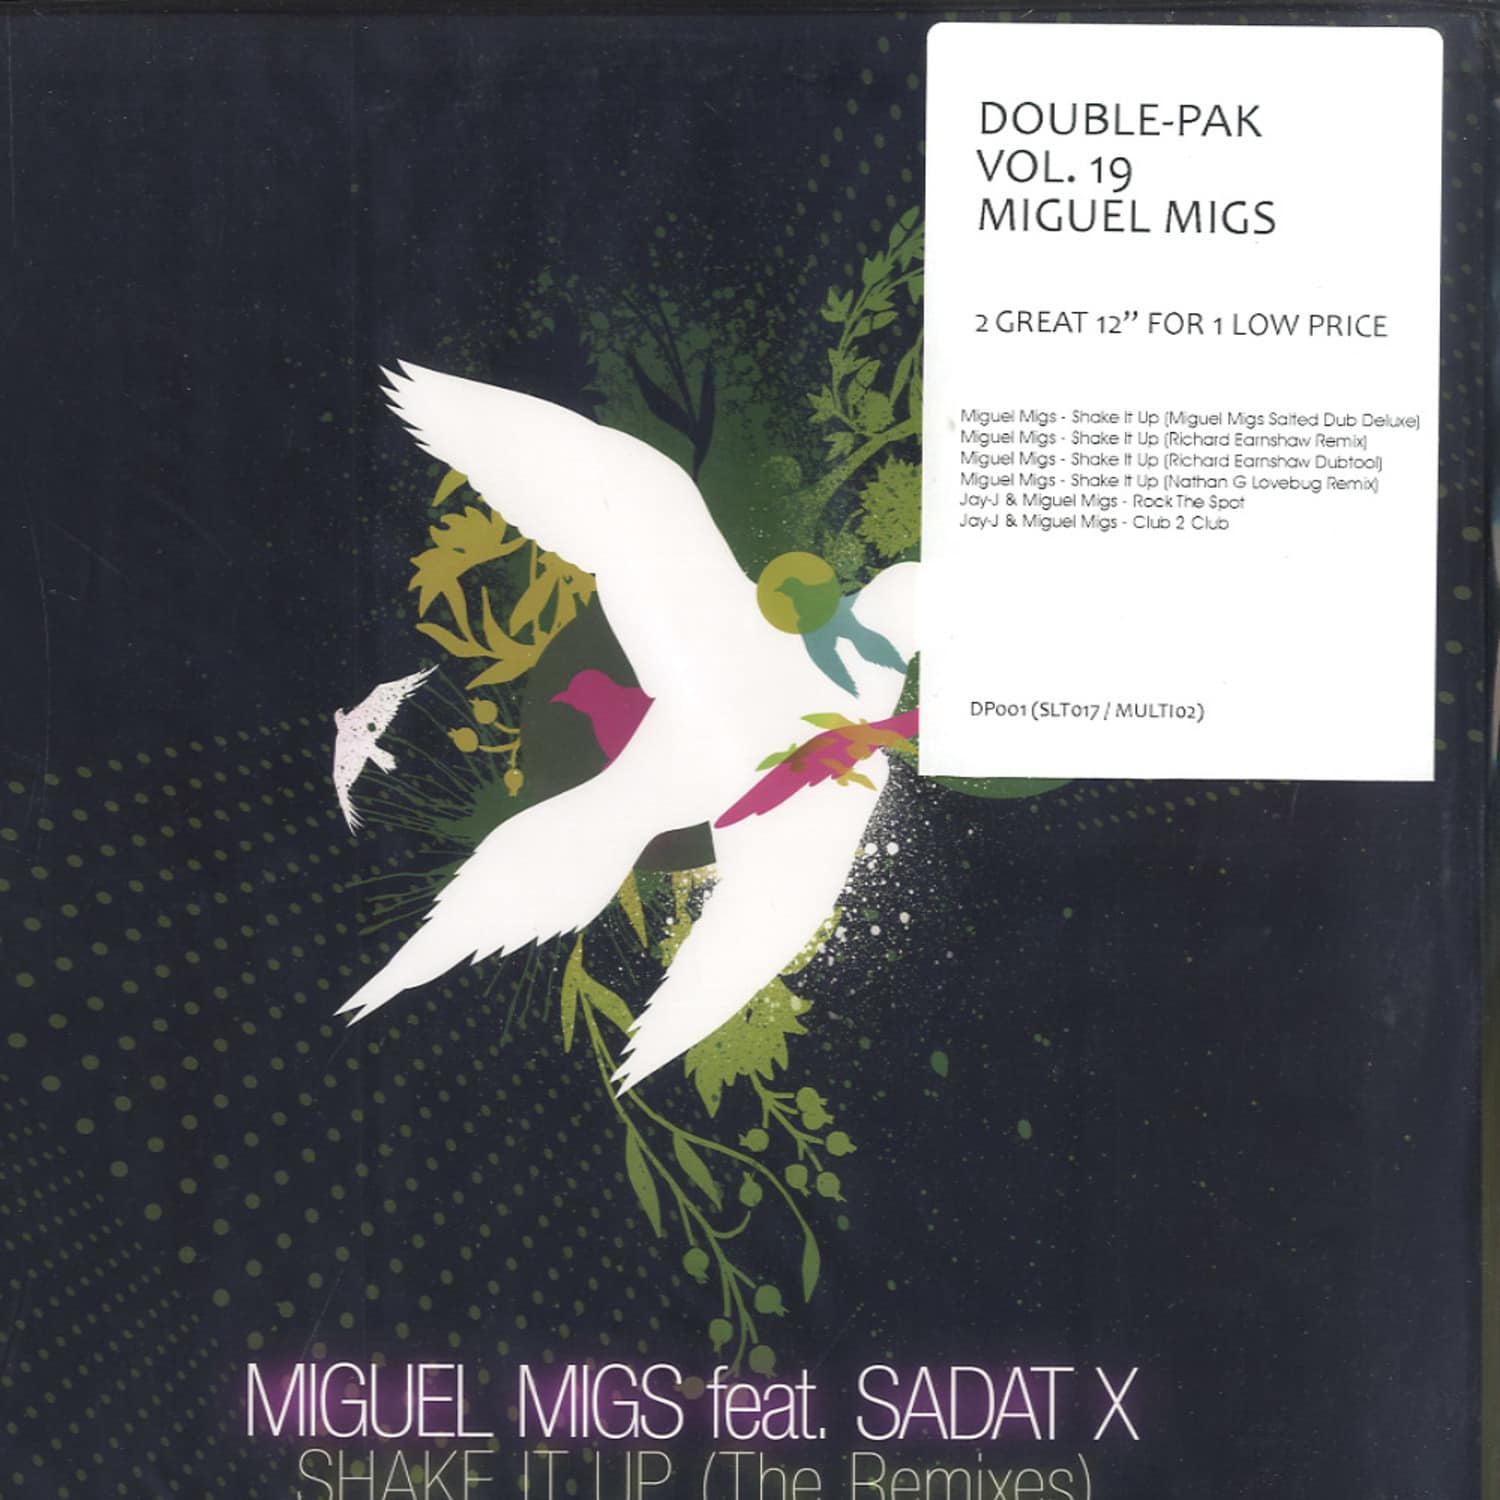 Miguel Migs & Jay-J - DOUBLE-PAK VOL.19 